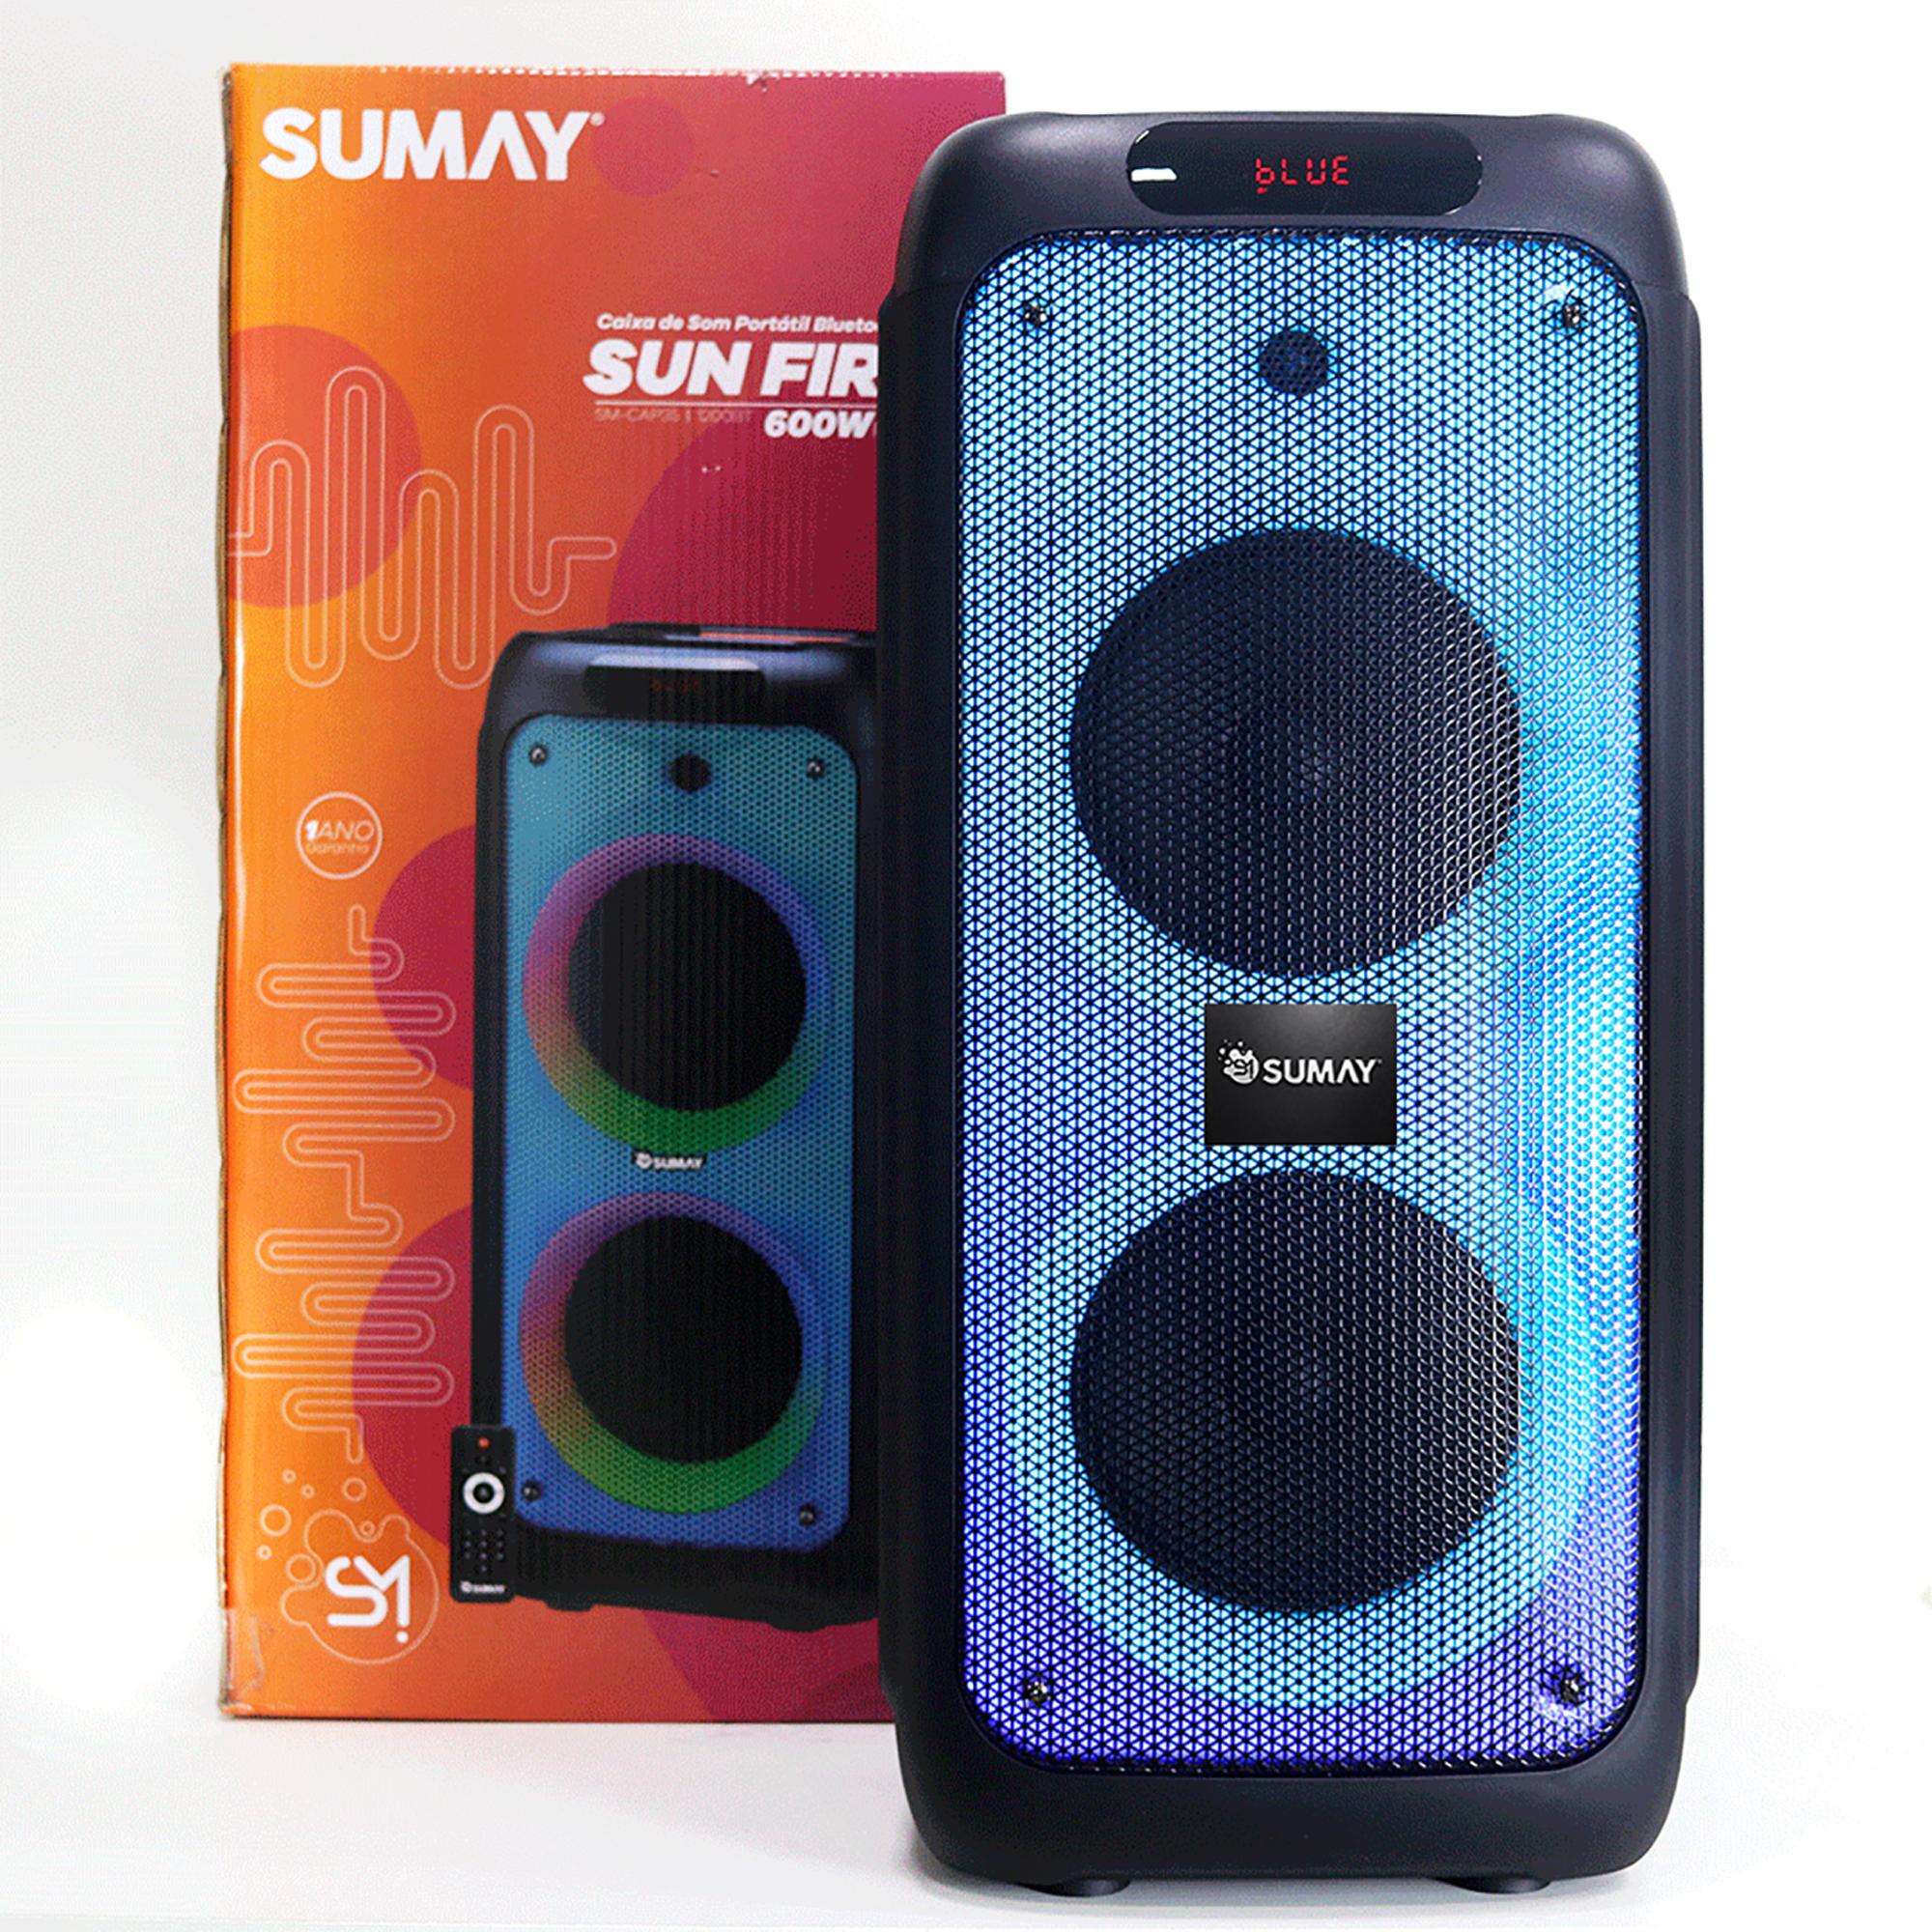 Caixa de Som Portátil Sumay Sunfire CAP35 600w Preta